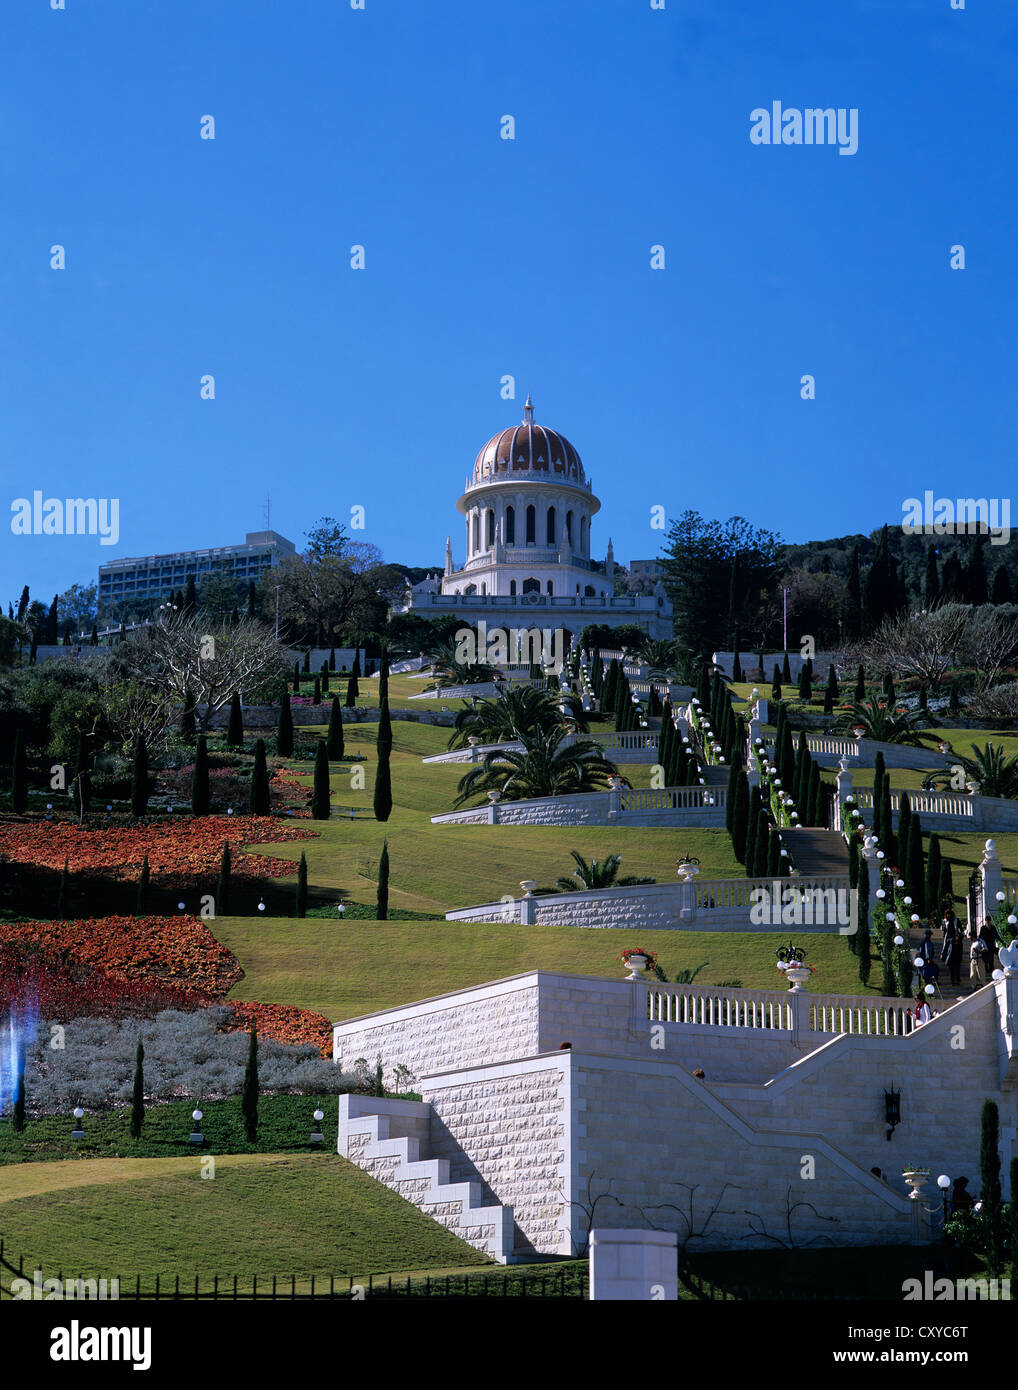 Israel. Haifa. The Bahia Shrine. Stock Photo